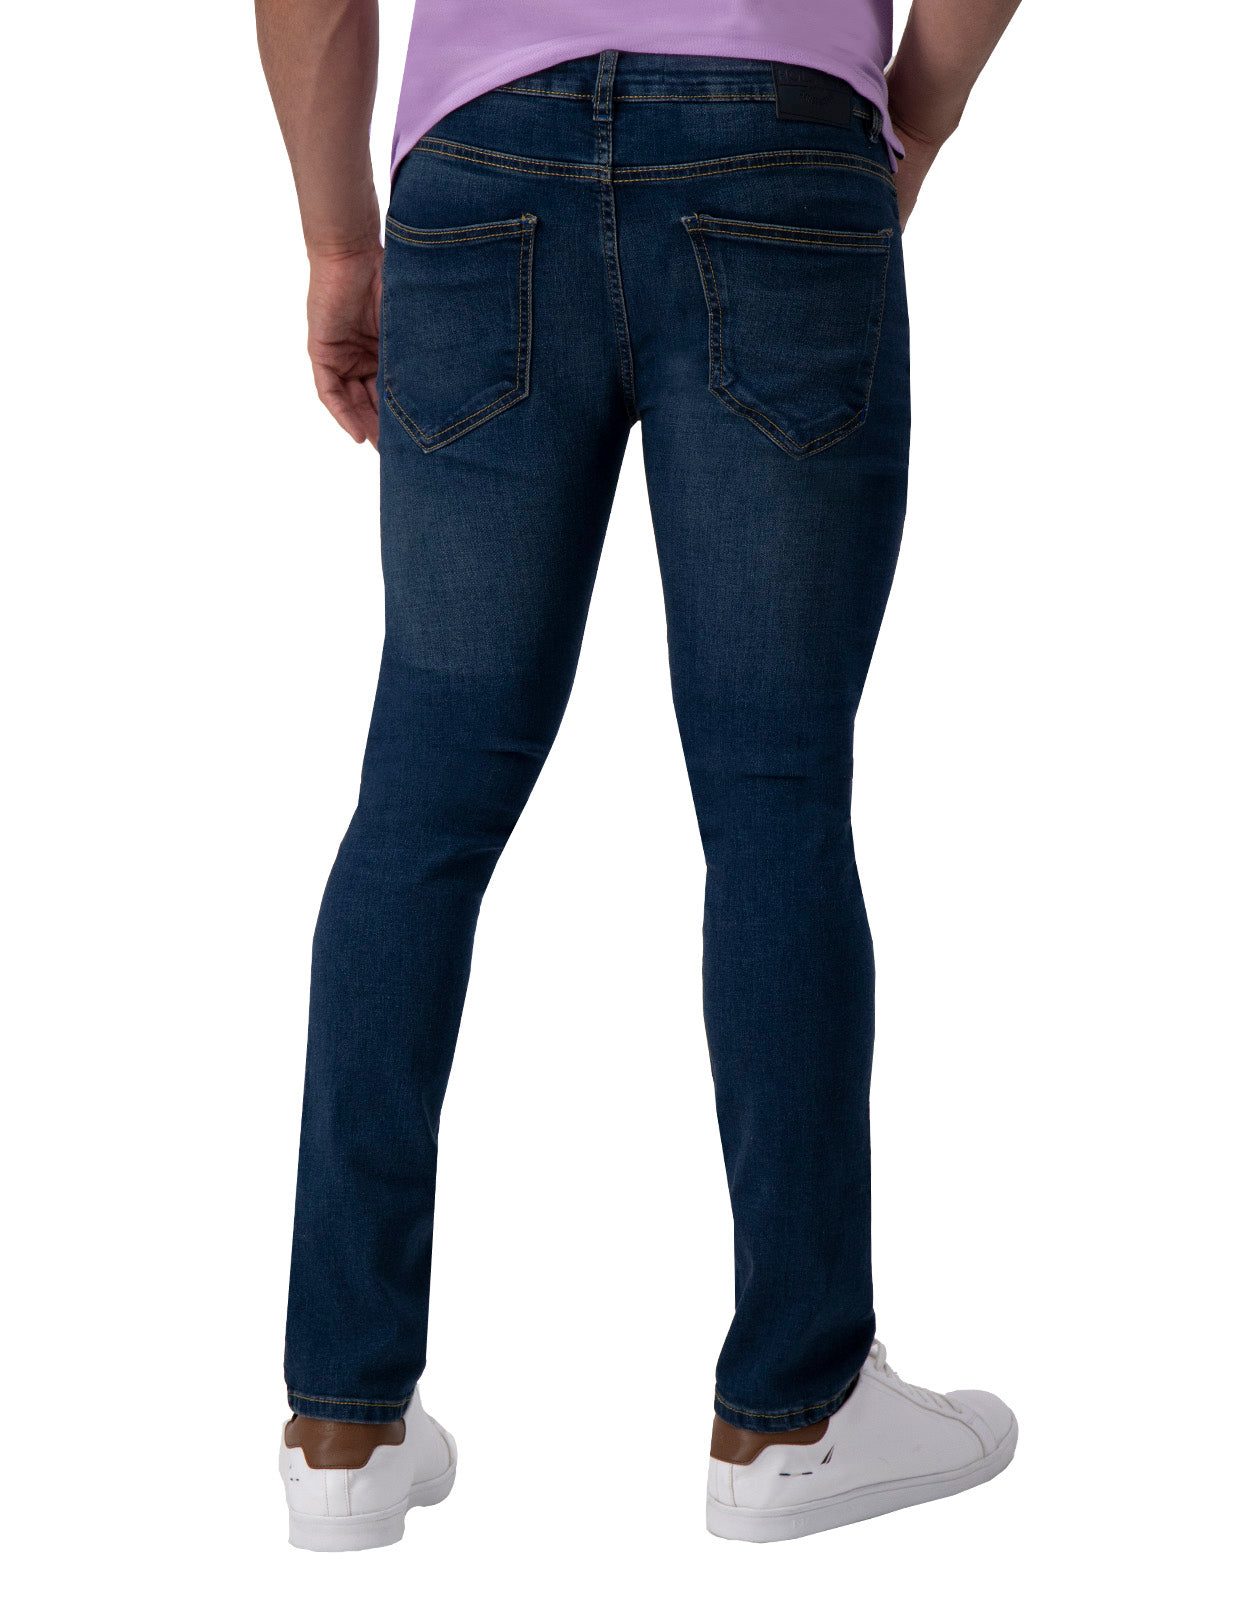 Jeans de Mezclilla Slim Fit - Sídney